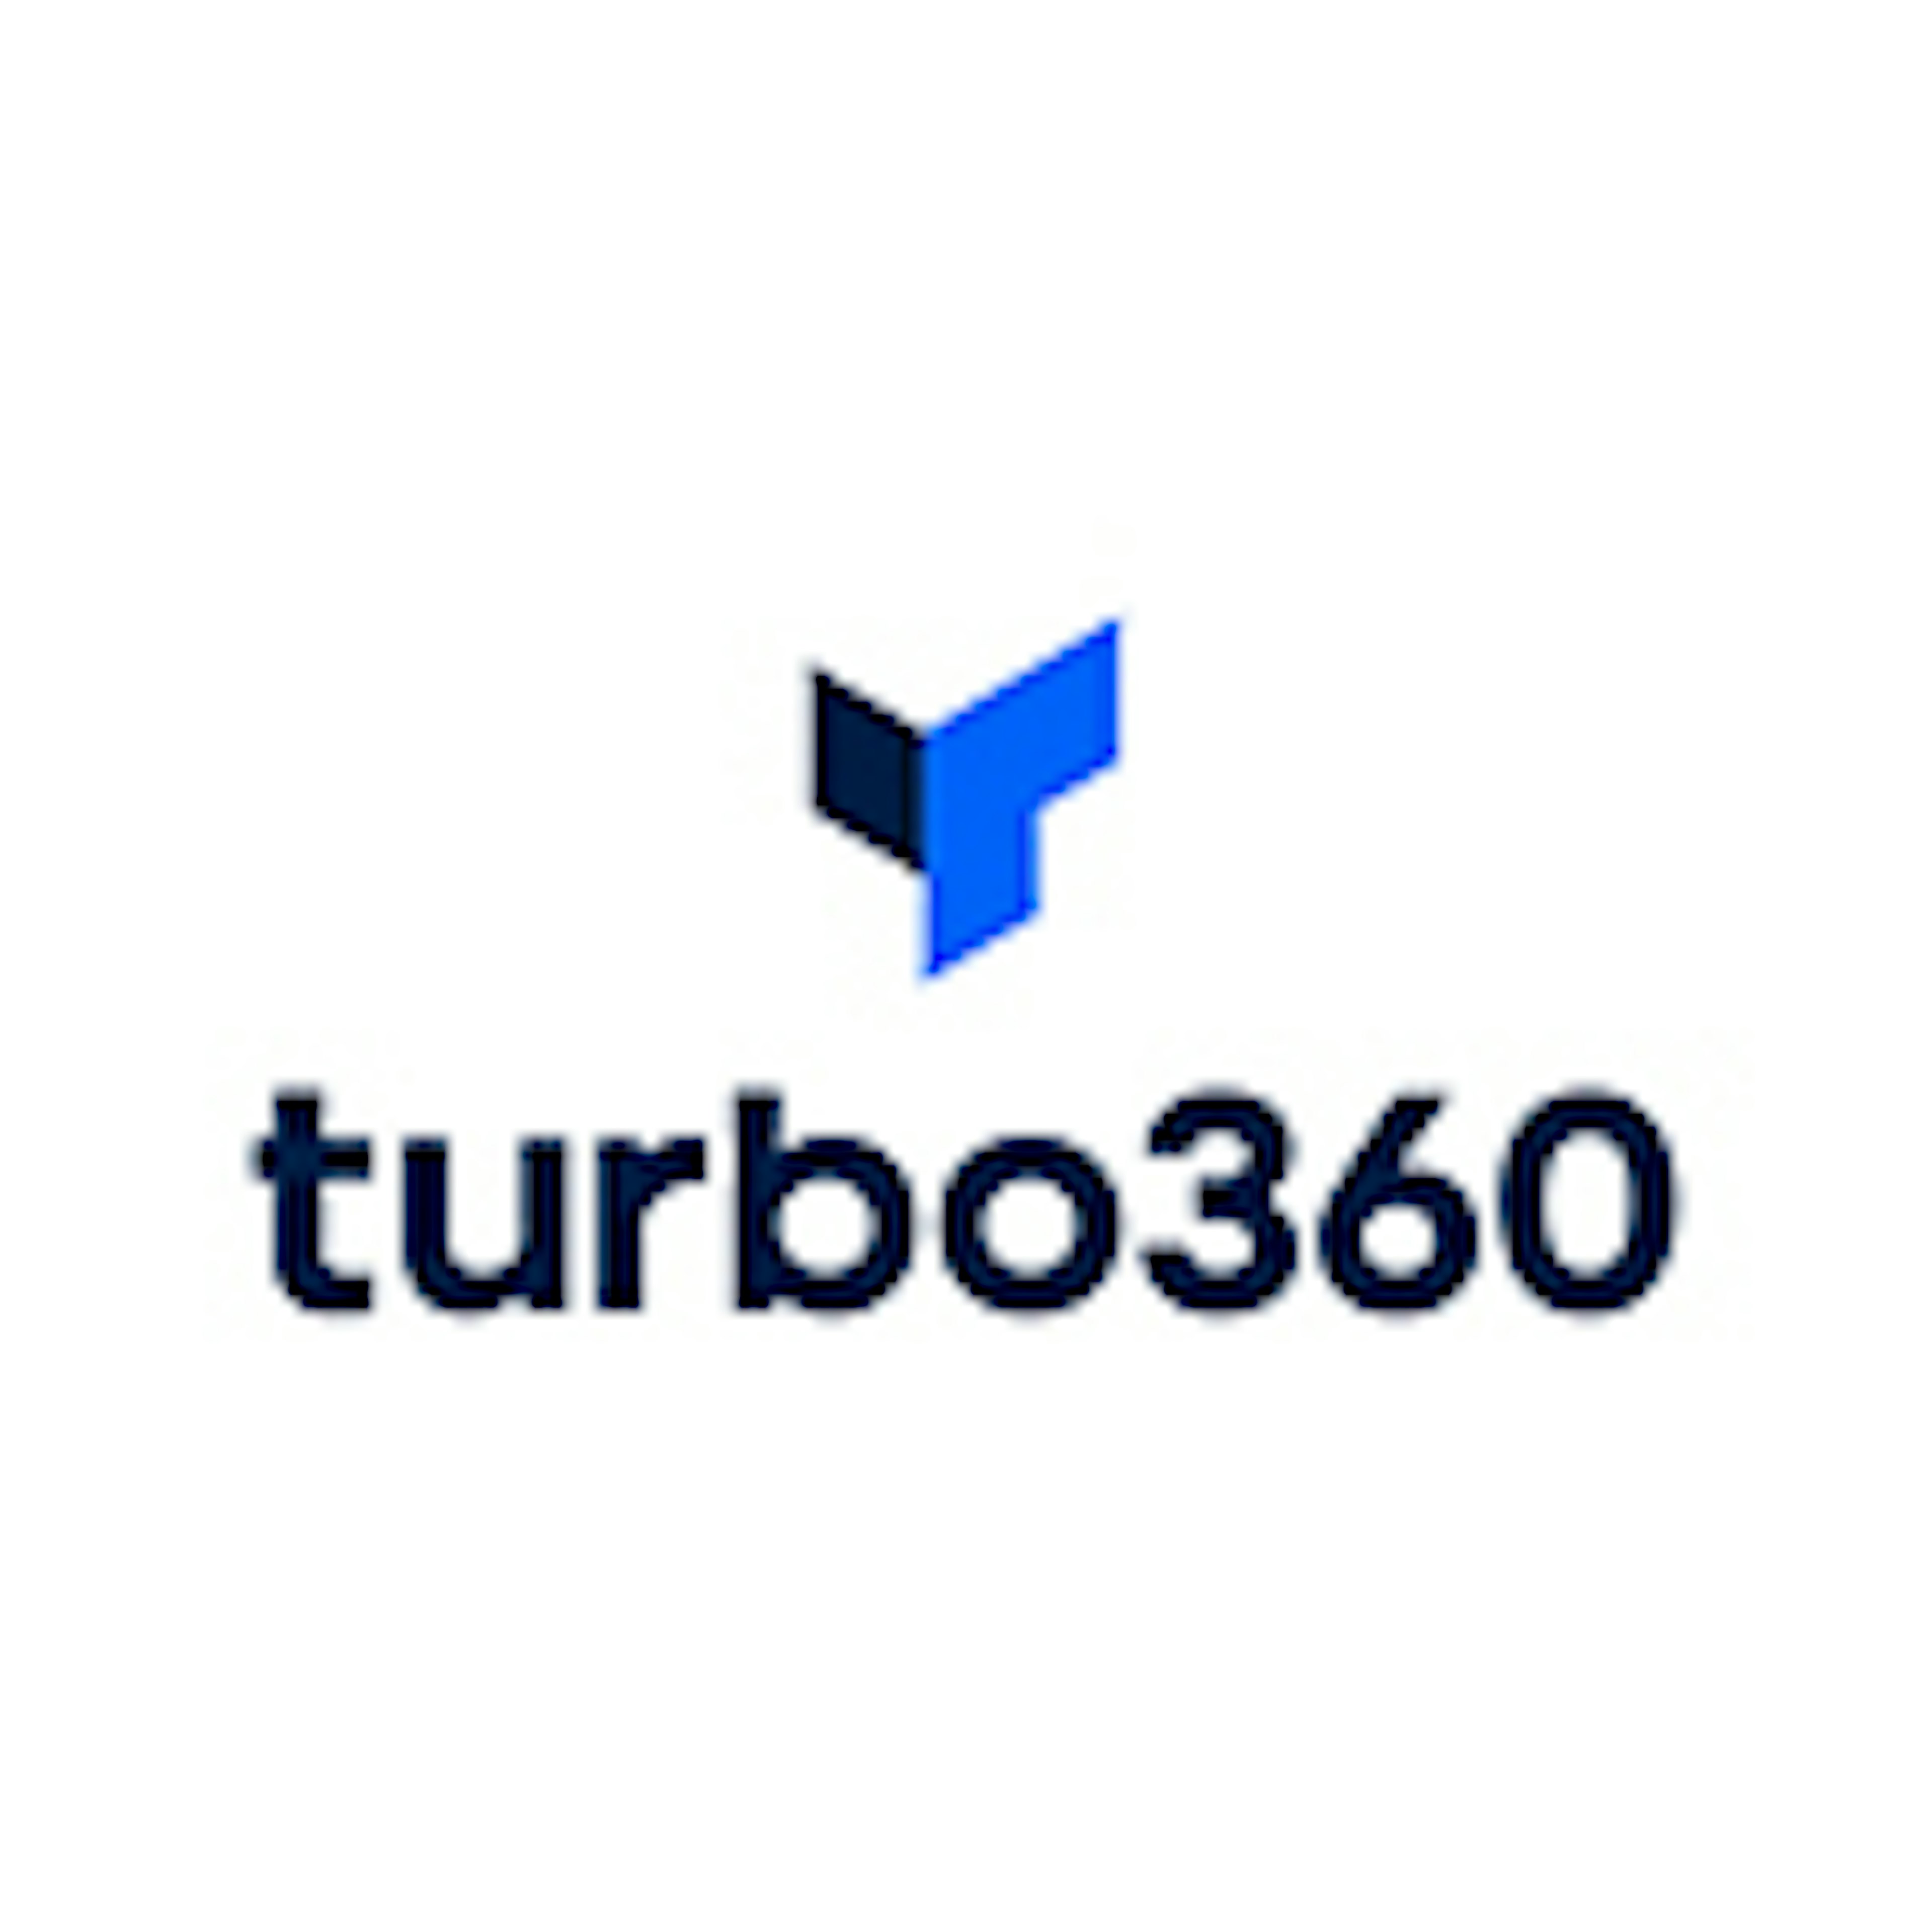 Turbo360 (Formerly Serverless360) Logo